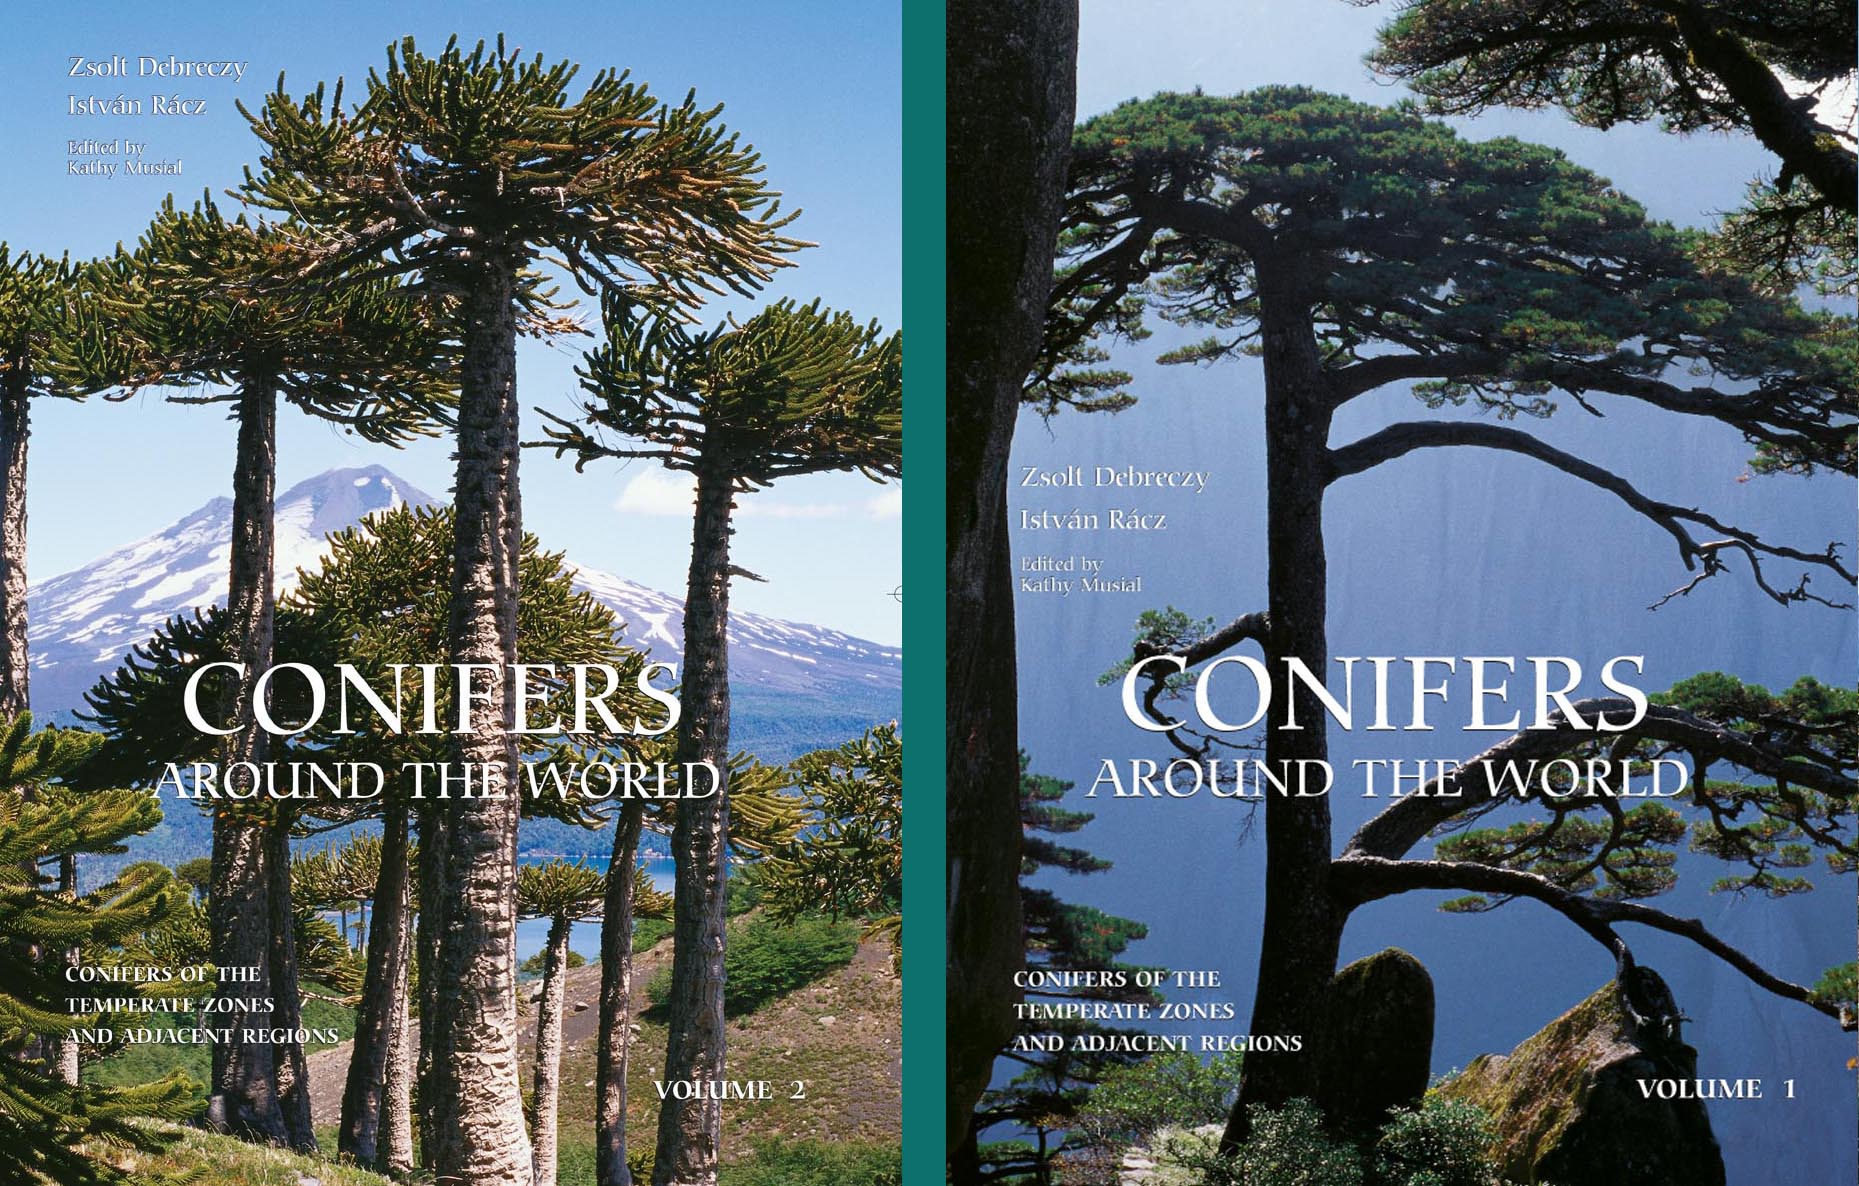 Conifers Around the World